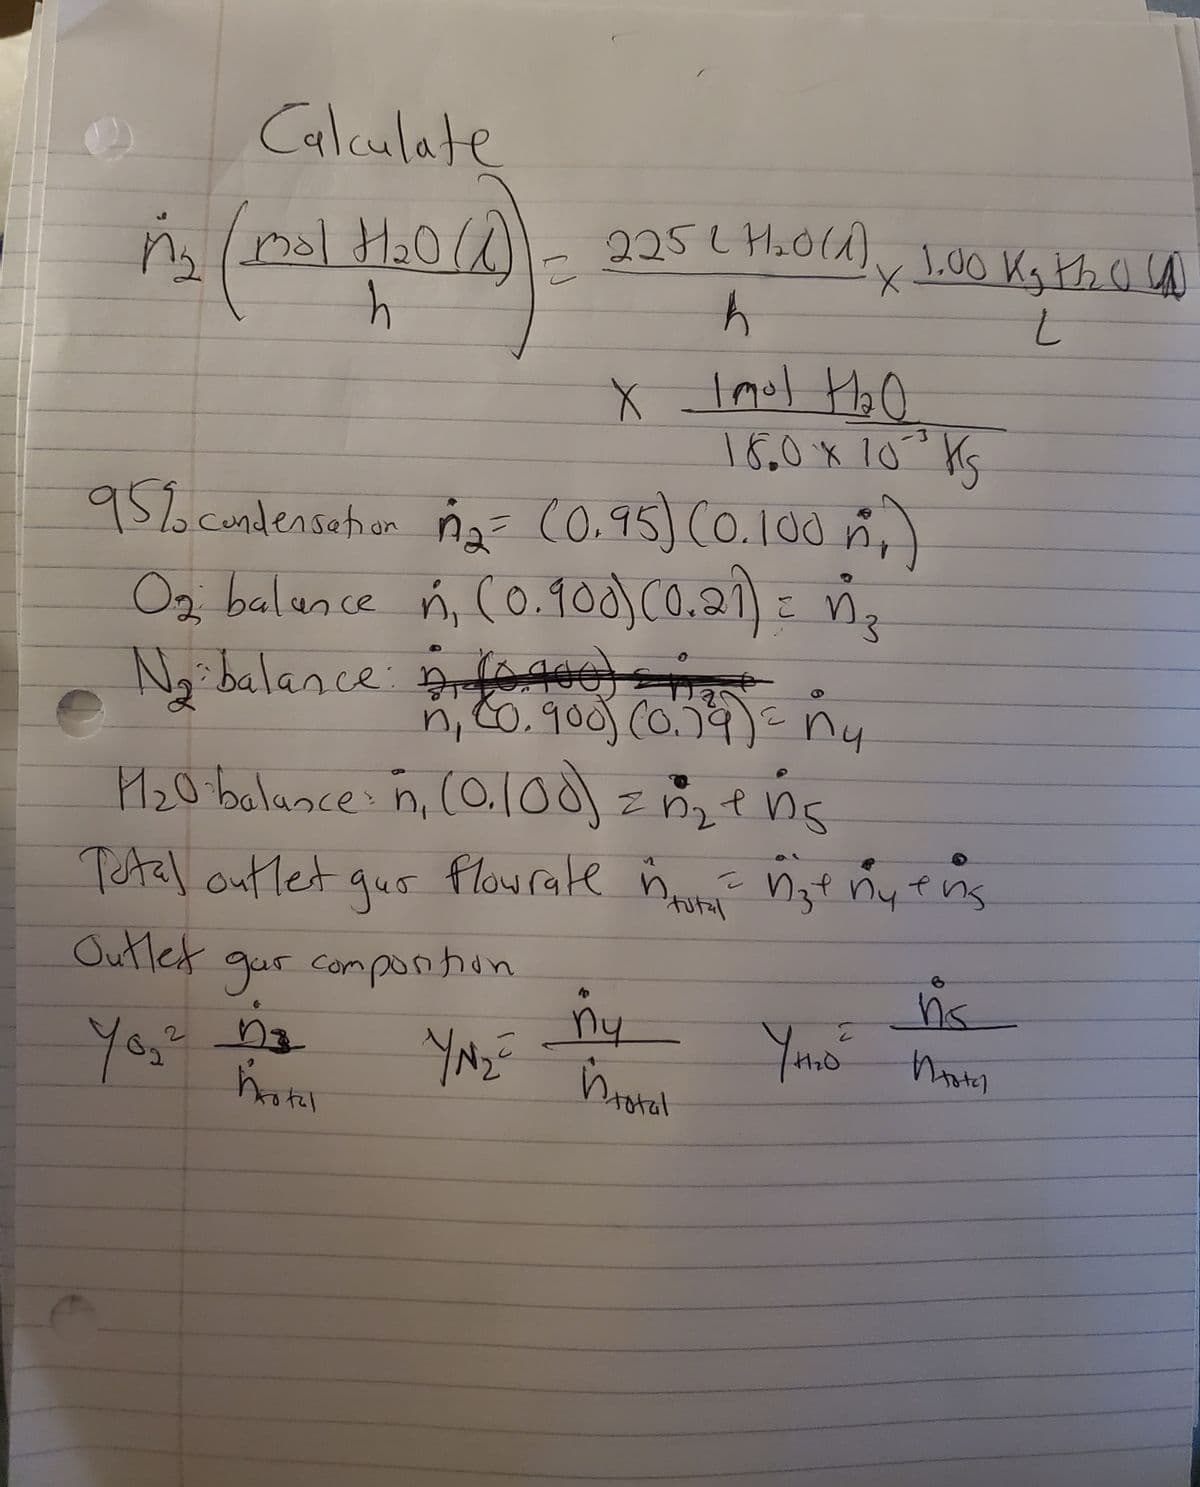 Calculate
7₂0(1)
M₂ (mal H₂0 (1)) - 925 e Hora), 1.00 Kg the C
сл
h
h
t
95% condensation 1₂ = (0.95) (0.100₂)
O₂ balance ń, (0.900) (0.21) = n₂
E
N₂ balance 10.400) ₂
n₁ (0.900) (0.34) = ny
1₂0 balance: n, (0.100) = n₂+ng
X Imol H₂O
18.0 × 10³ KS
Total outlet gur flowrate nu nze ny ens
tutal
Outlet gar composition
D₂
YN₂=
You'
2
hrotal
40
ny
in total
~
10
YH₂O²
6
ns
Итак